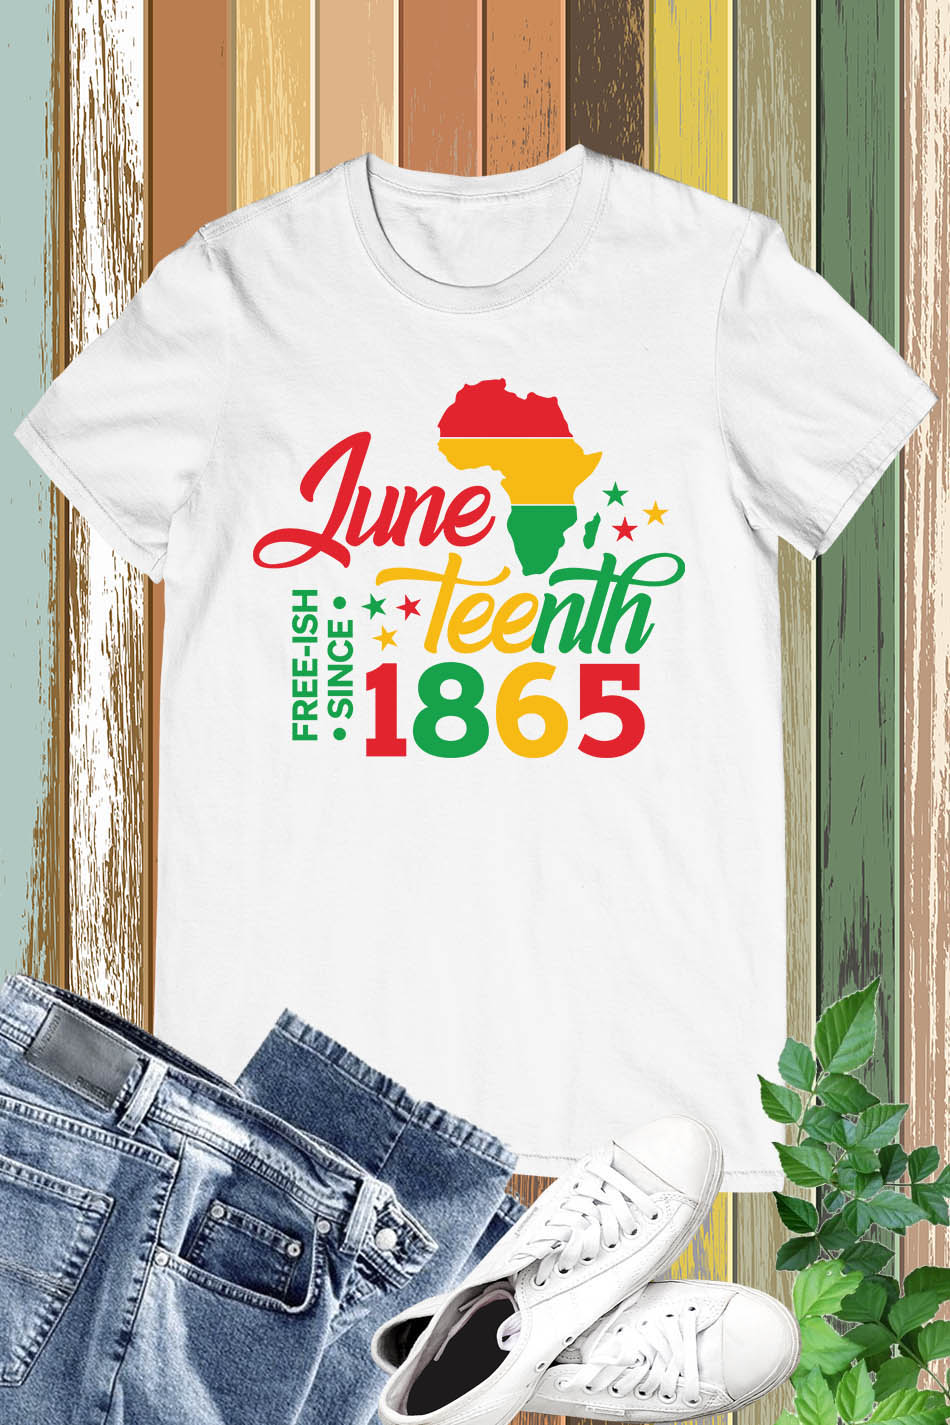 June 10th 1865 Black history Shirt